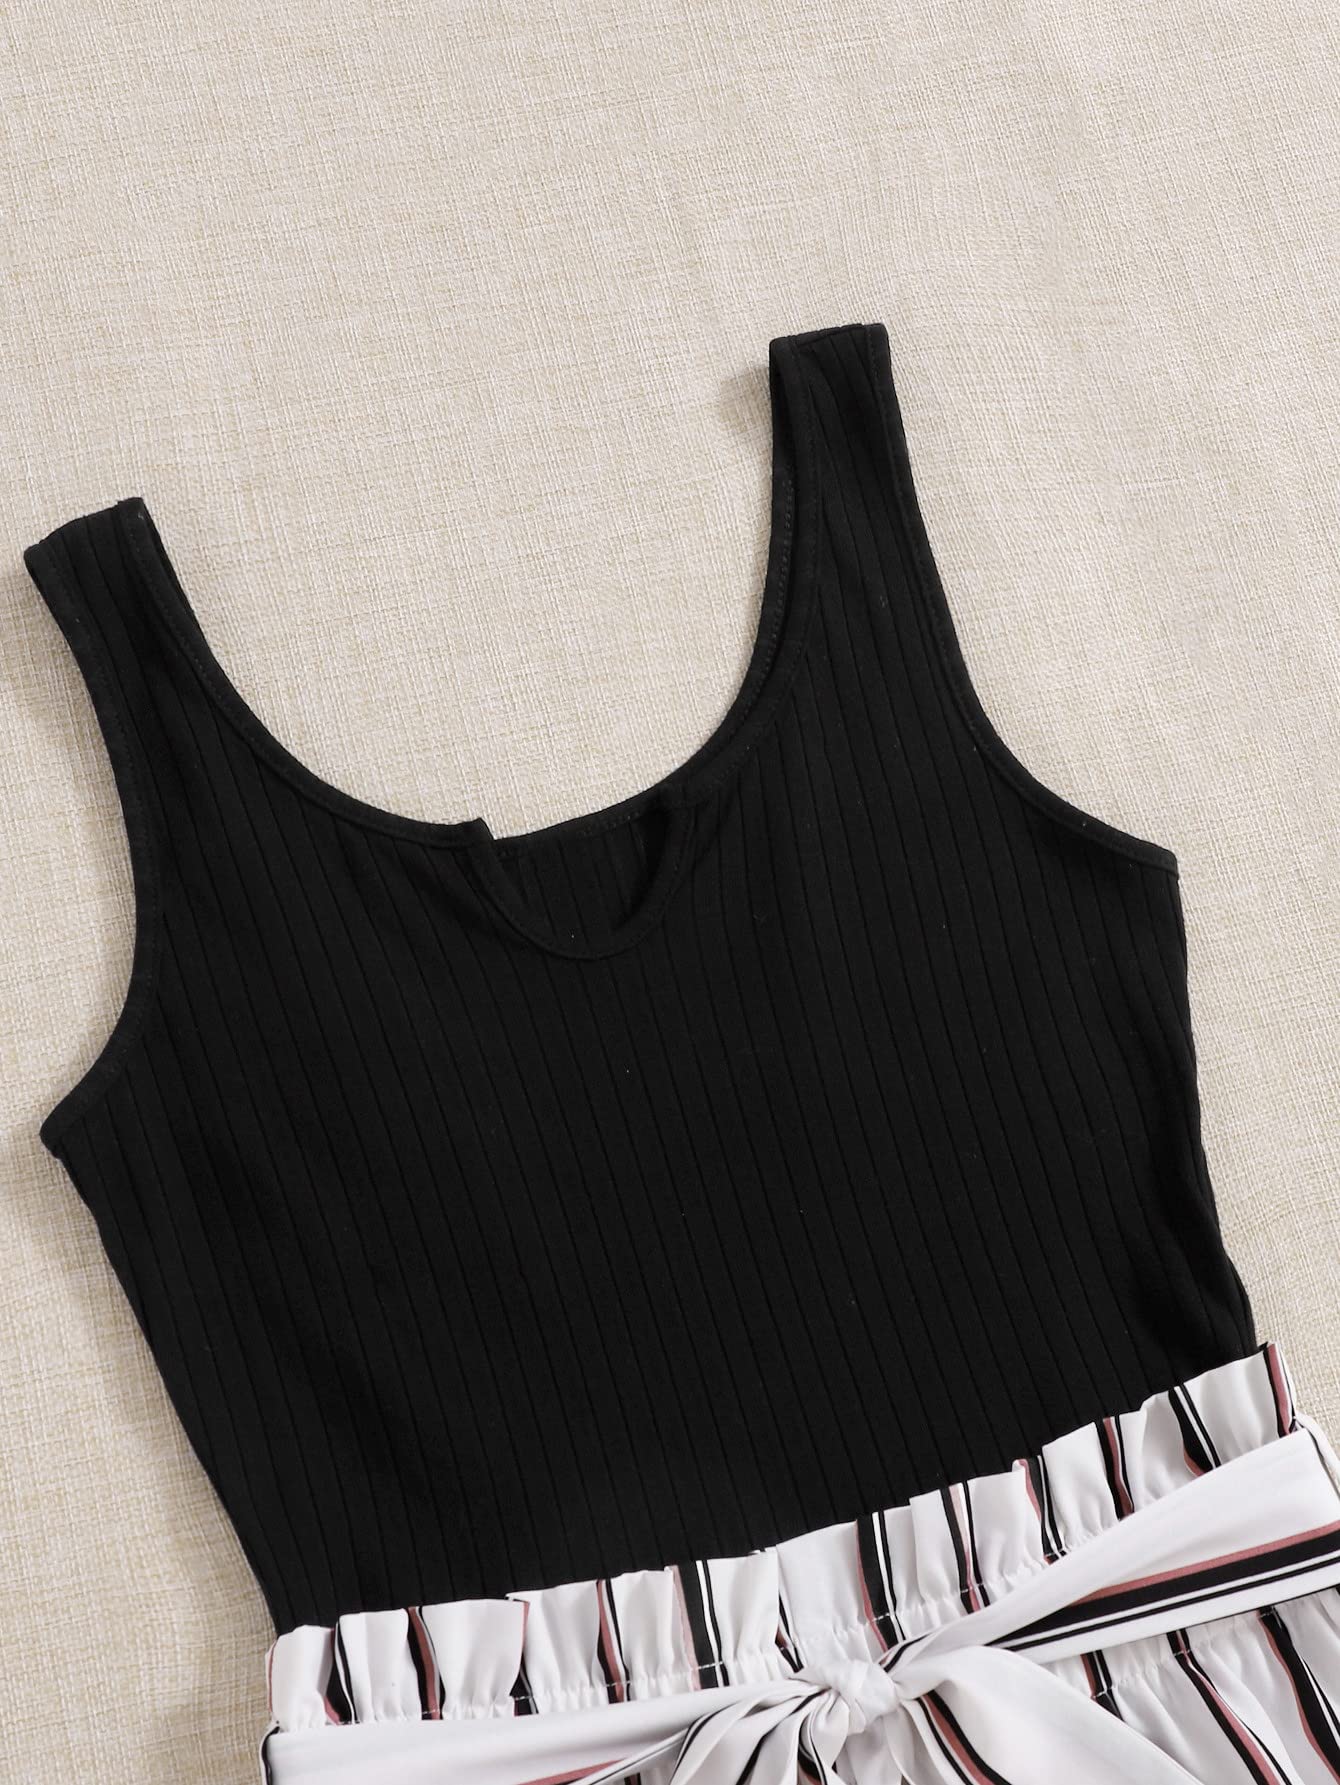 SOLY HUX Women's Summer Sleeveless Striped Belted Tank Romper Short Jumpsuit Black White XS